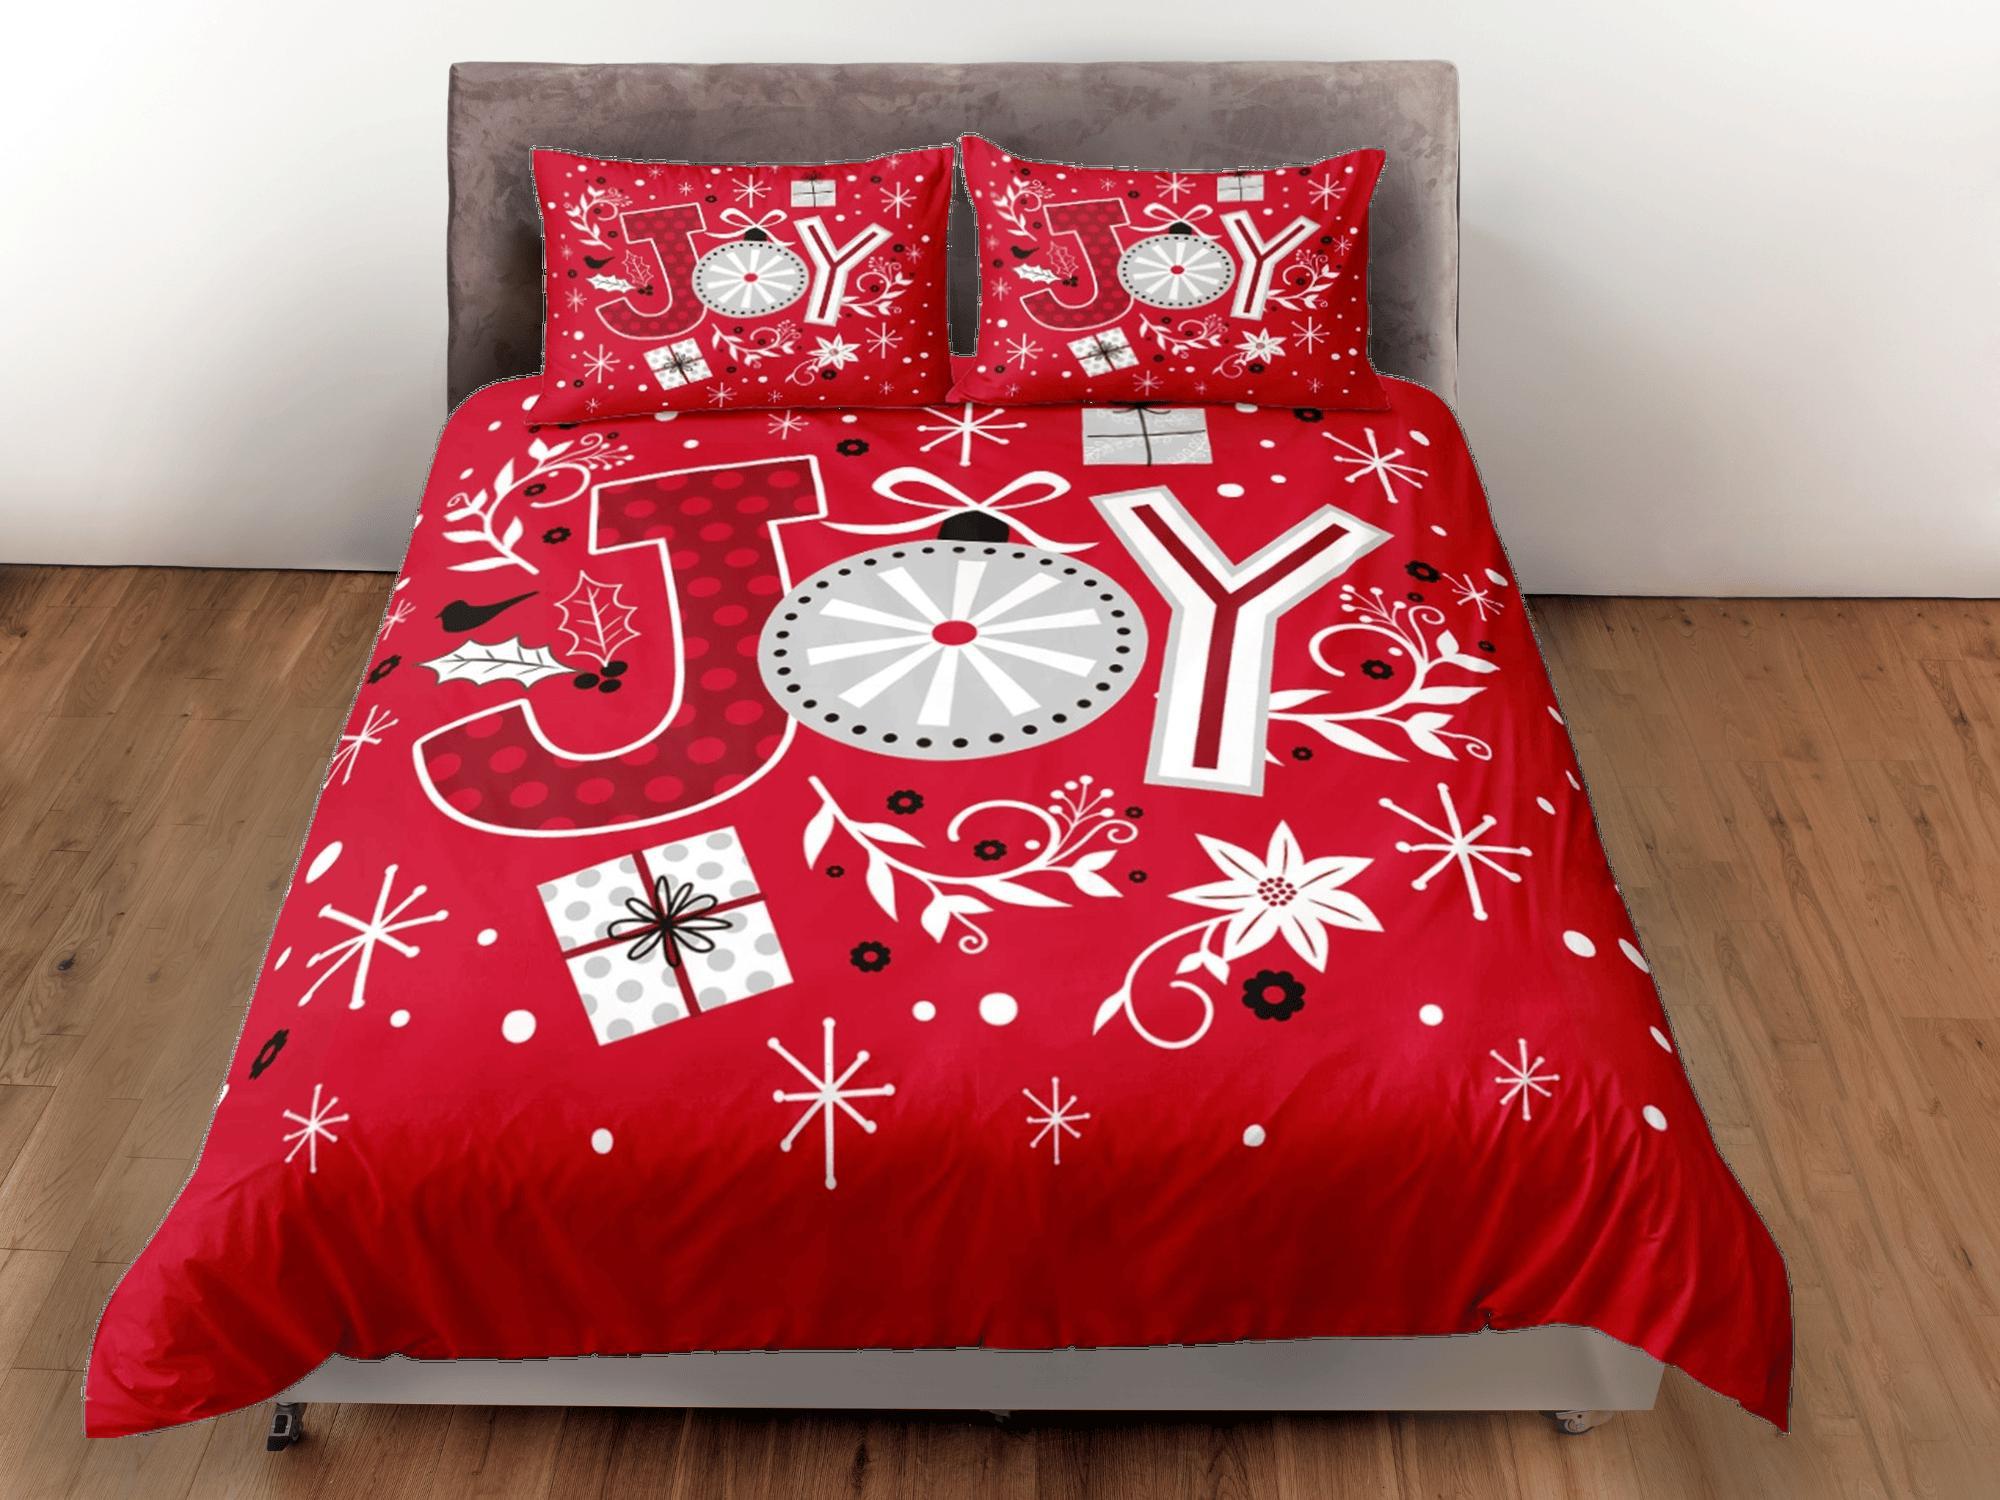 daintyduvet Christmas Duvet Cover Set and Christmas Pillows Red Bedding Comforter Cover Christmas Gift